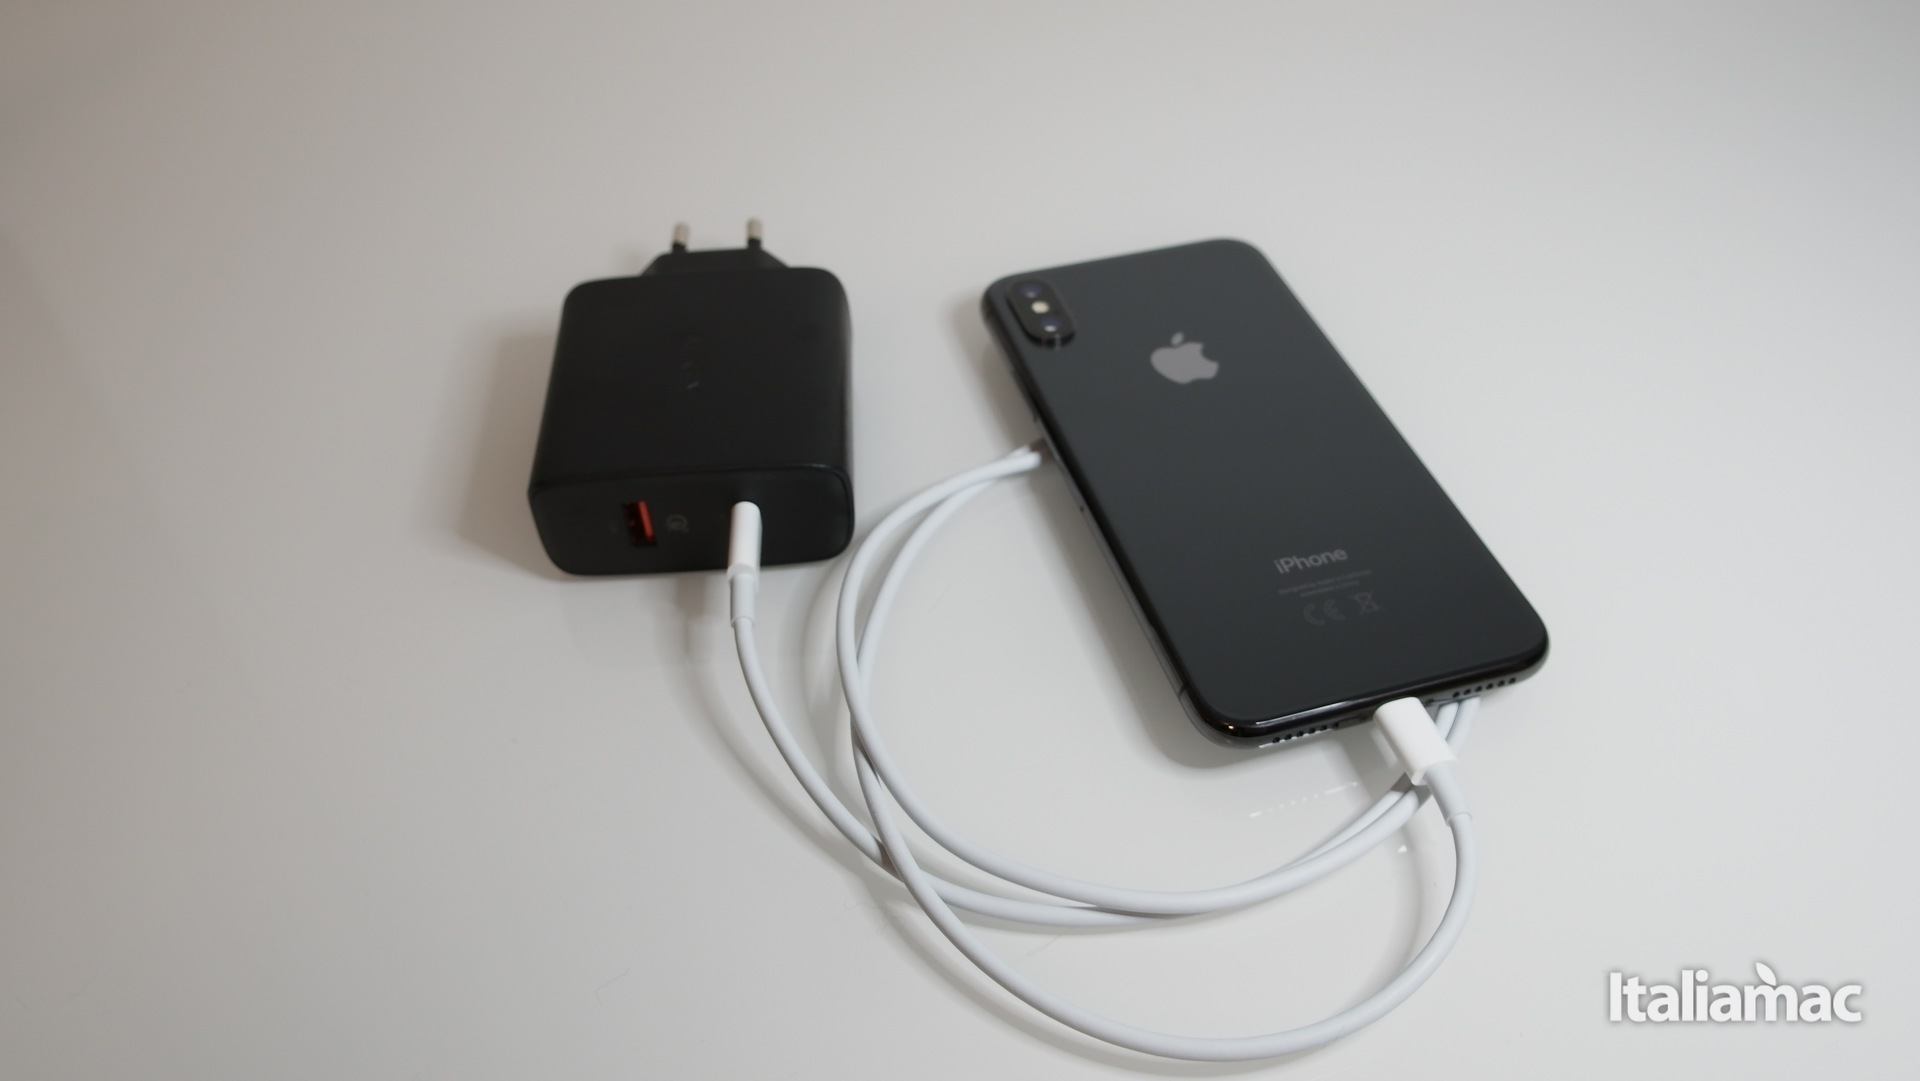 Caricabatterie Aukey USB-C per caricare rapidamente iPhone 8/Plus/X 5